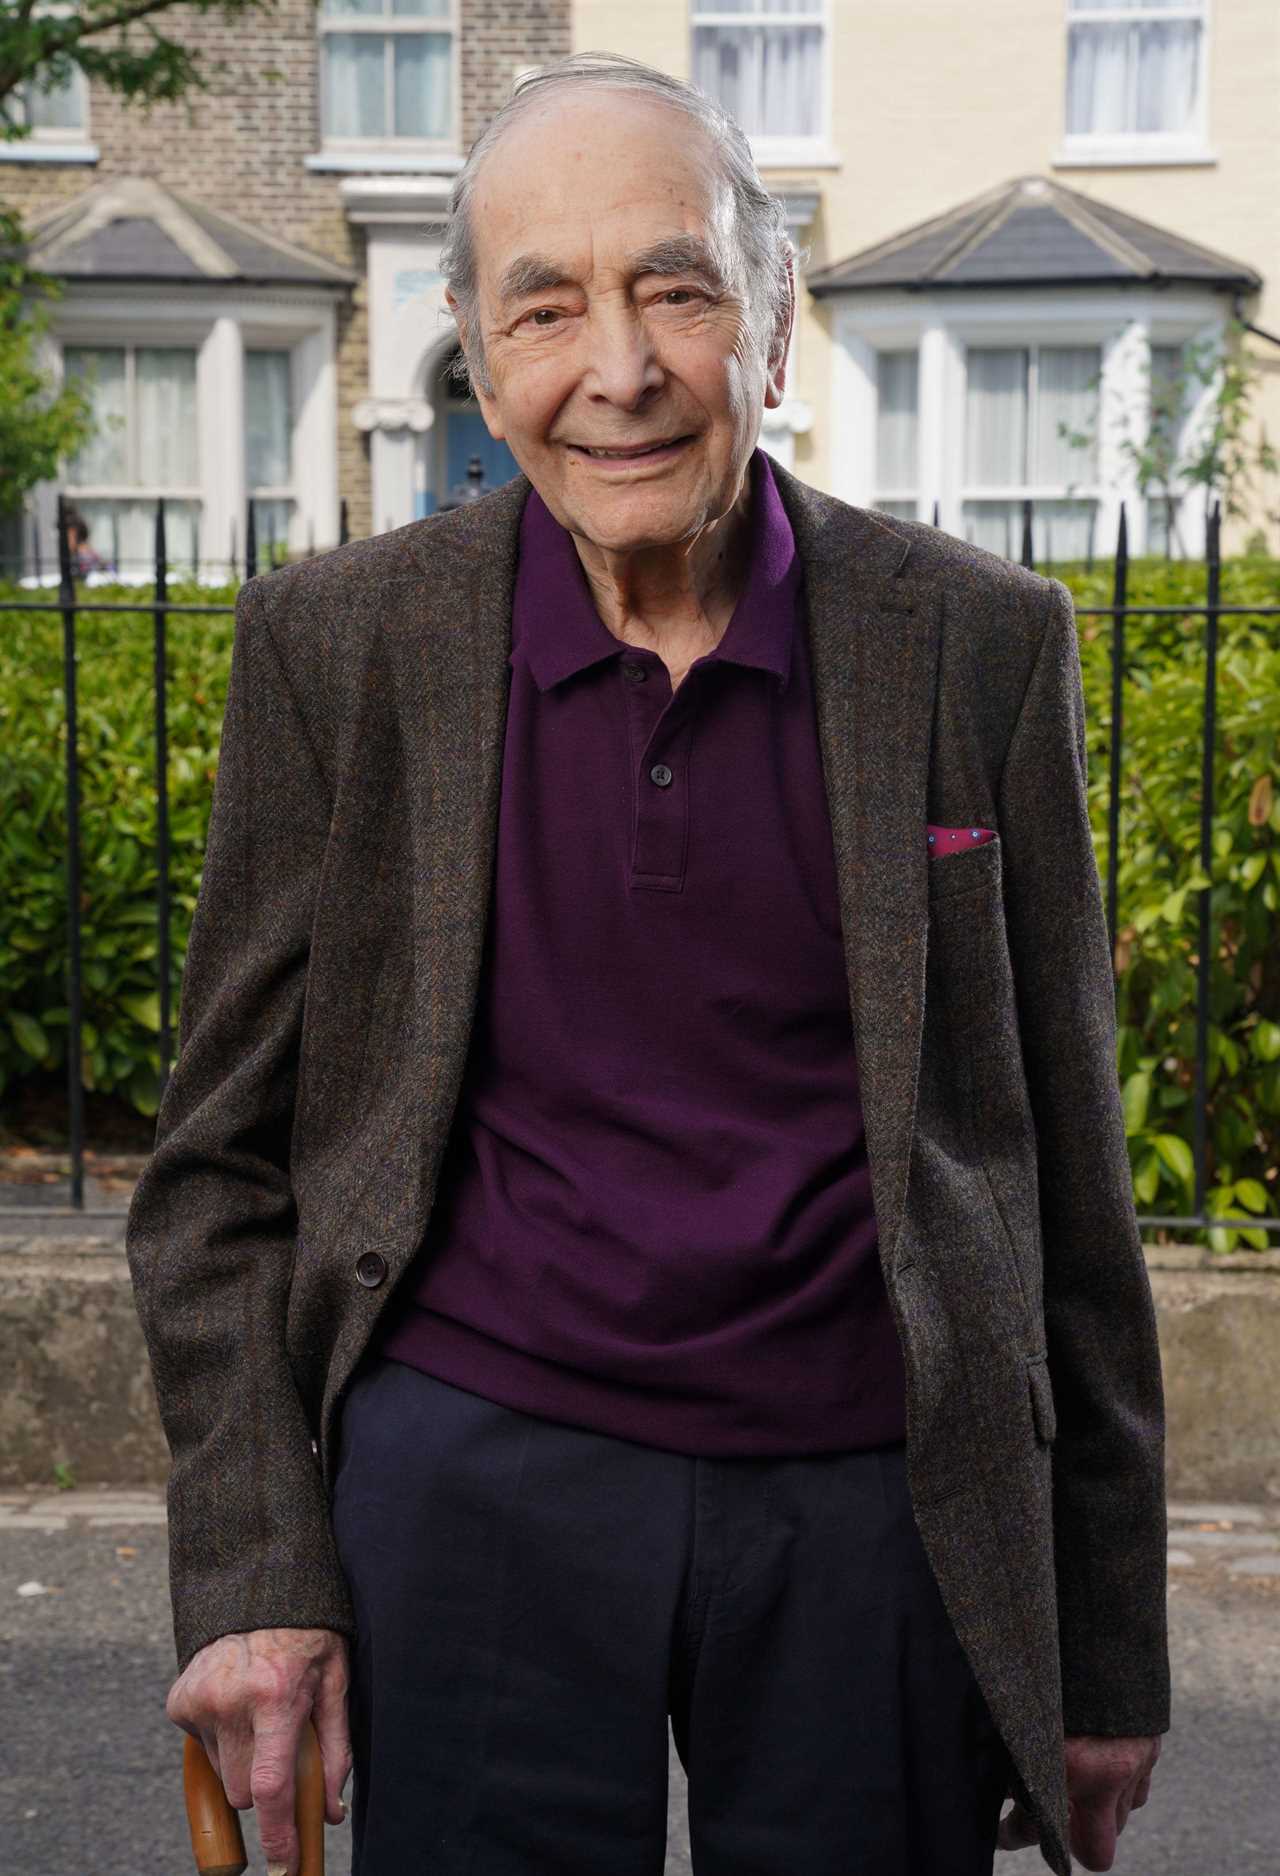 EastEnders star Leonard Fenton is returning to the soap this autumn as Doctor Harold Legg